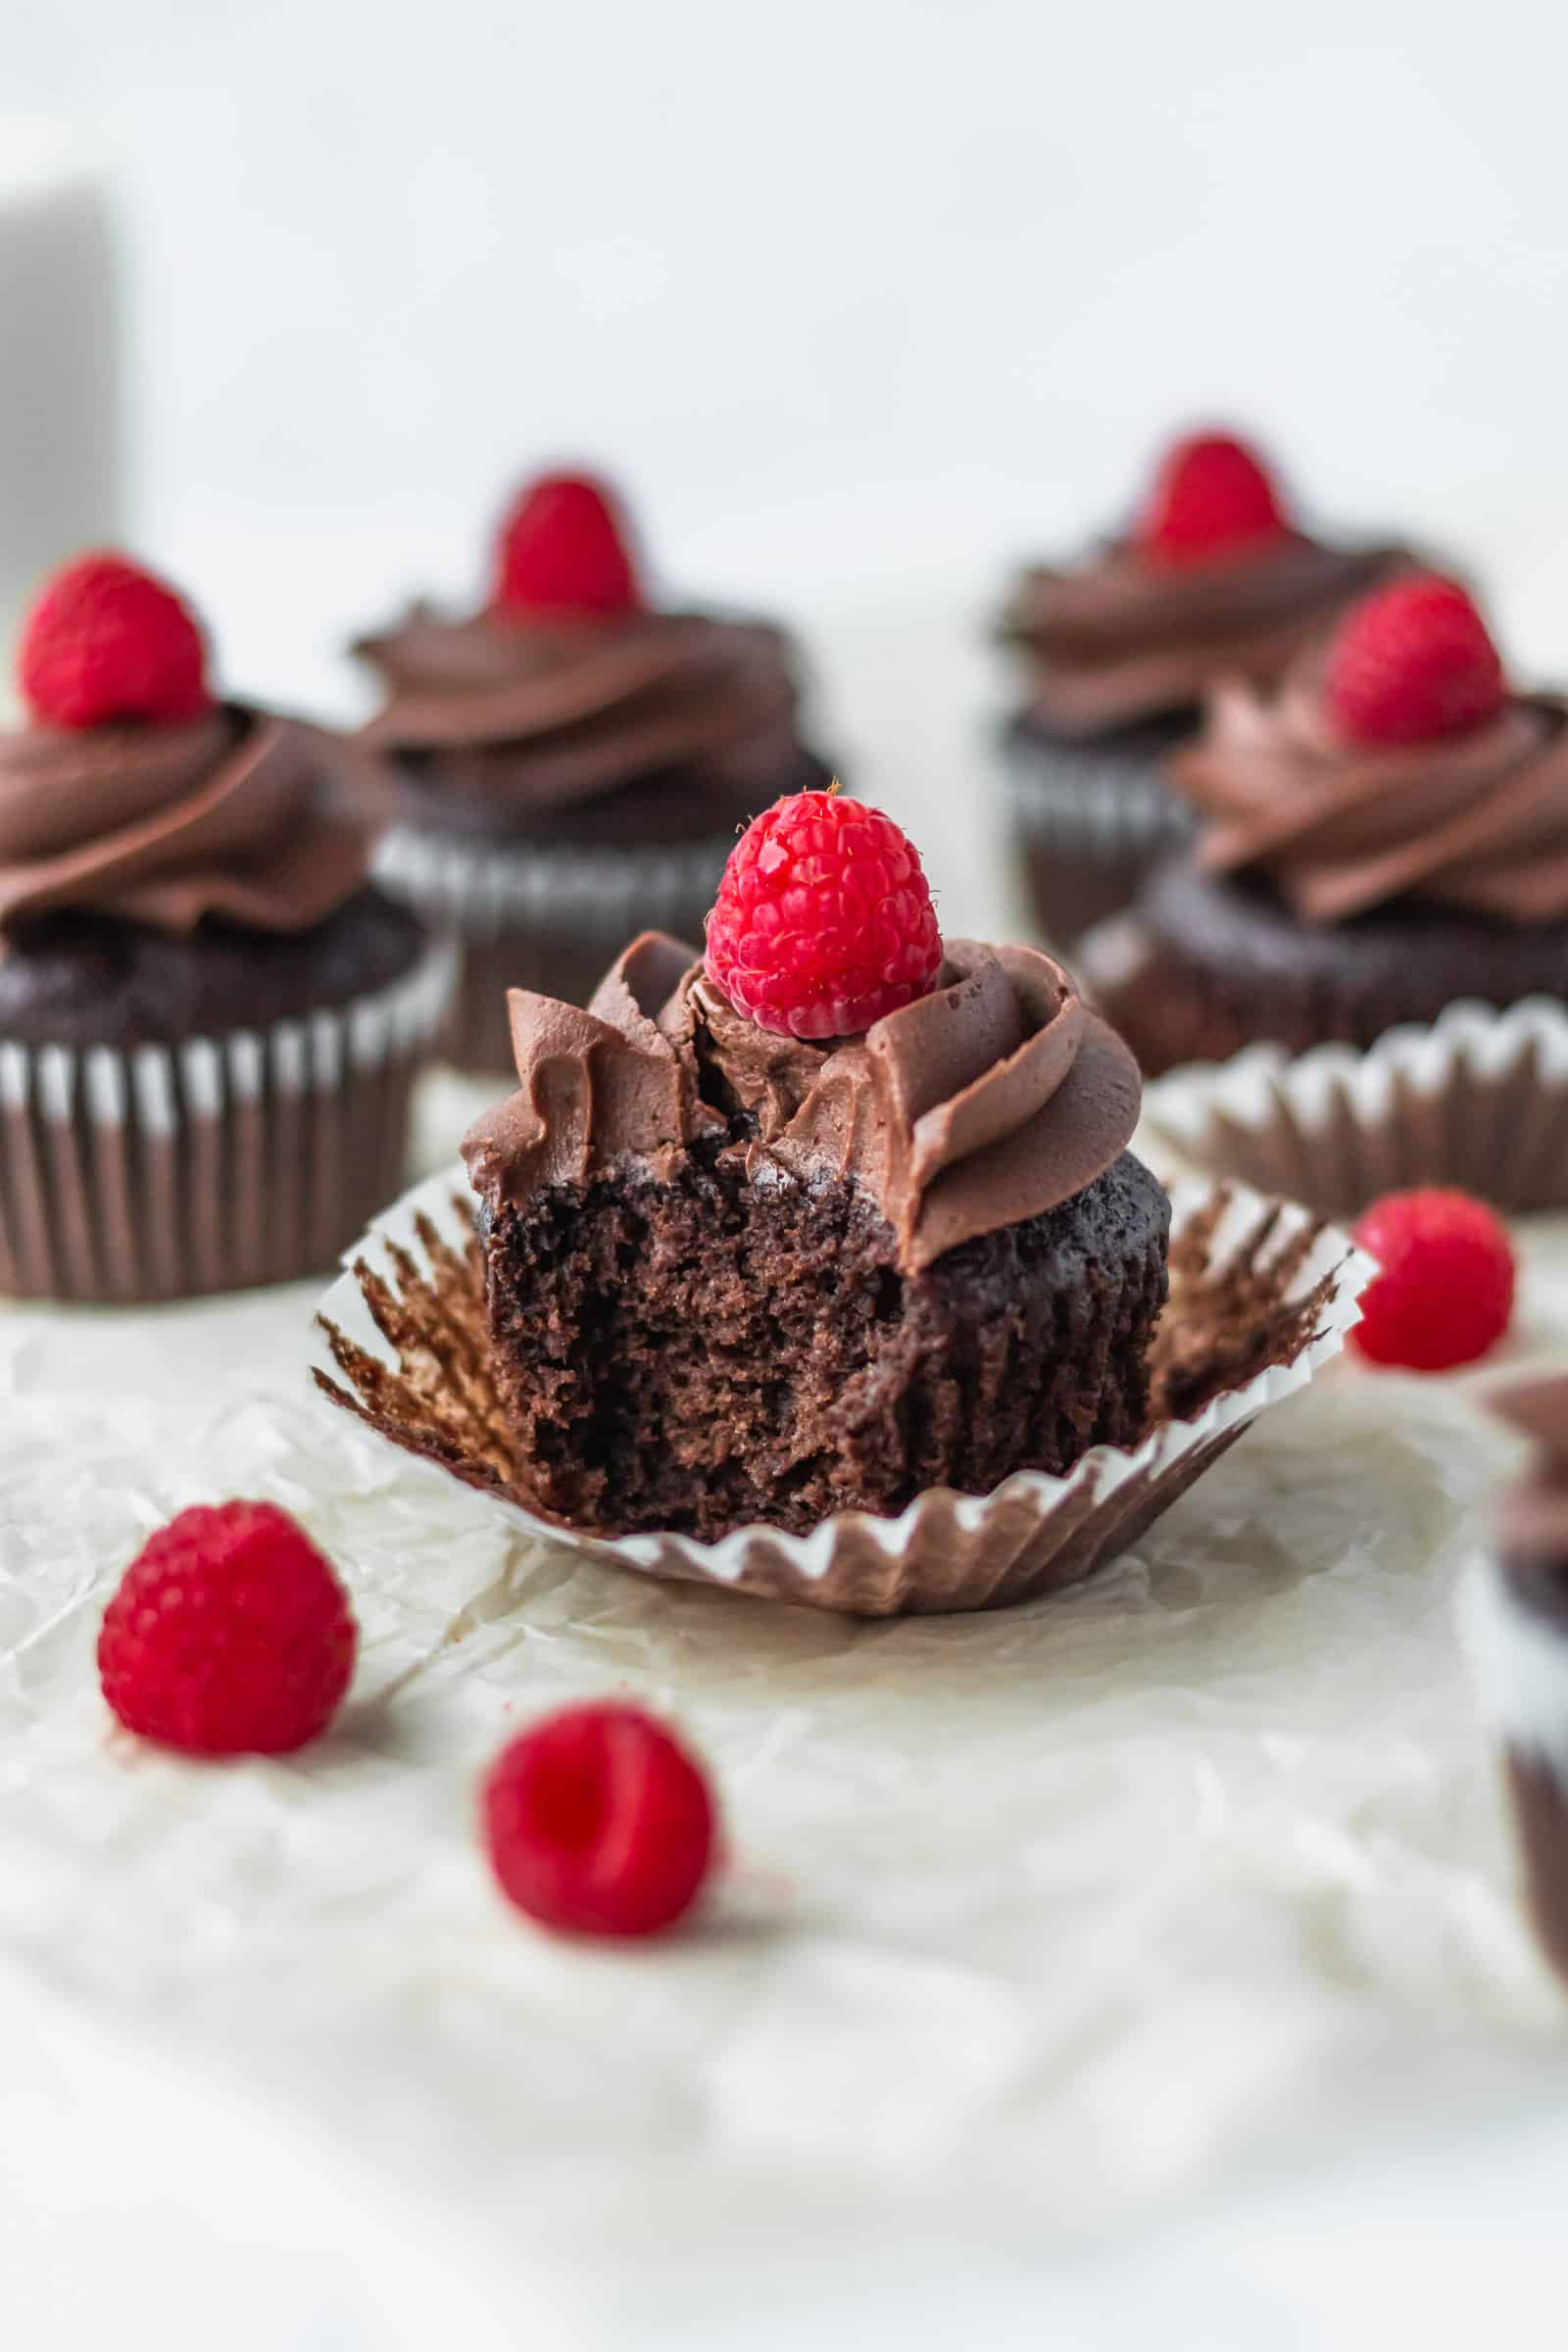 The perfect chocolate cupcakes for your vegan Valentine on Valentine’s Day! #chocolatecupcakes #bananacupcakes #valentinesdaydessert #veganvalentinesday #vegancupcakes